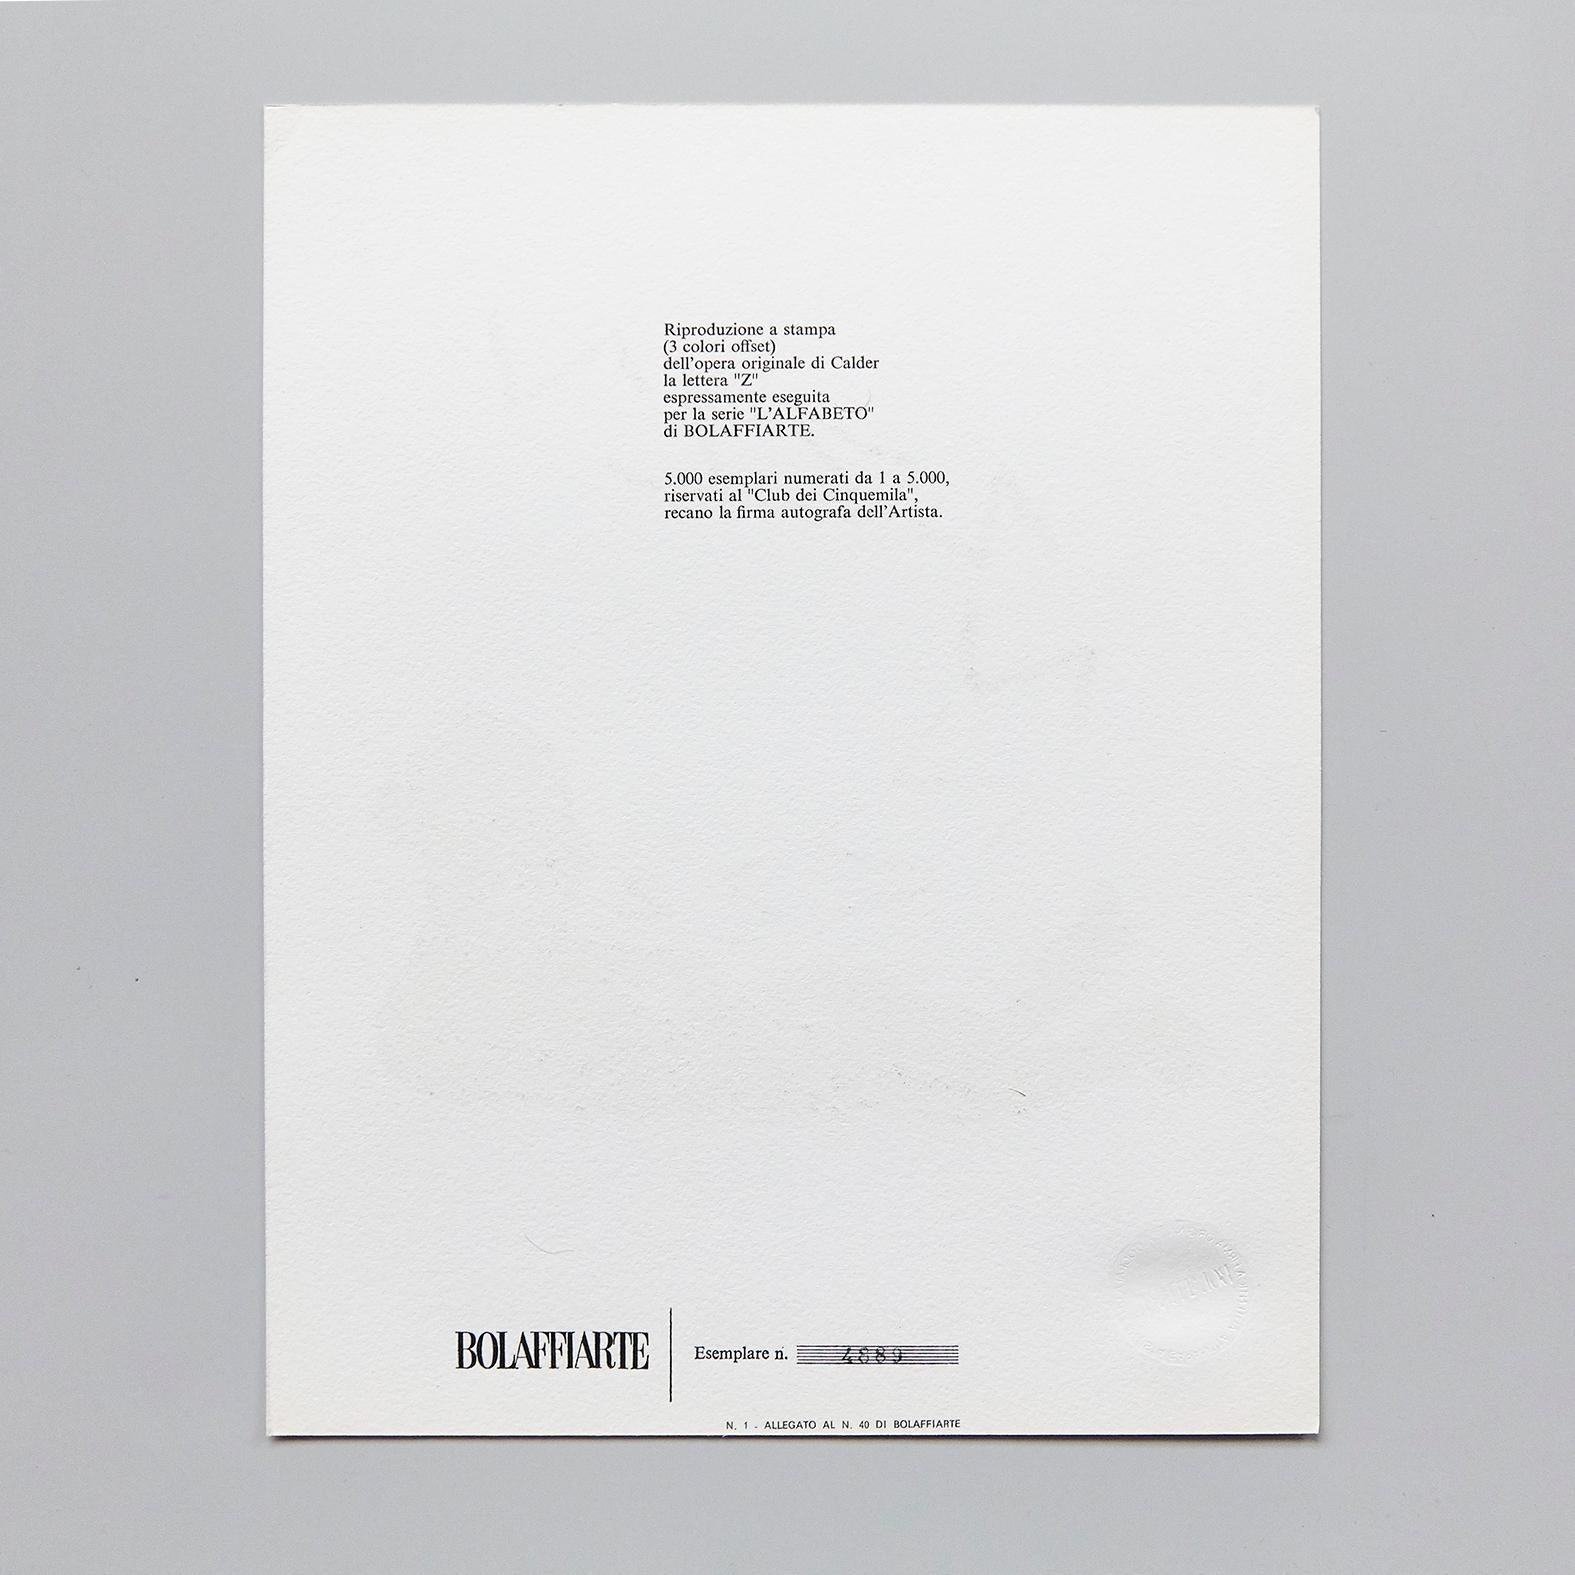 Paper Alexander Calder, Lithography, 1973